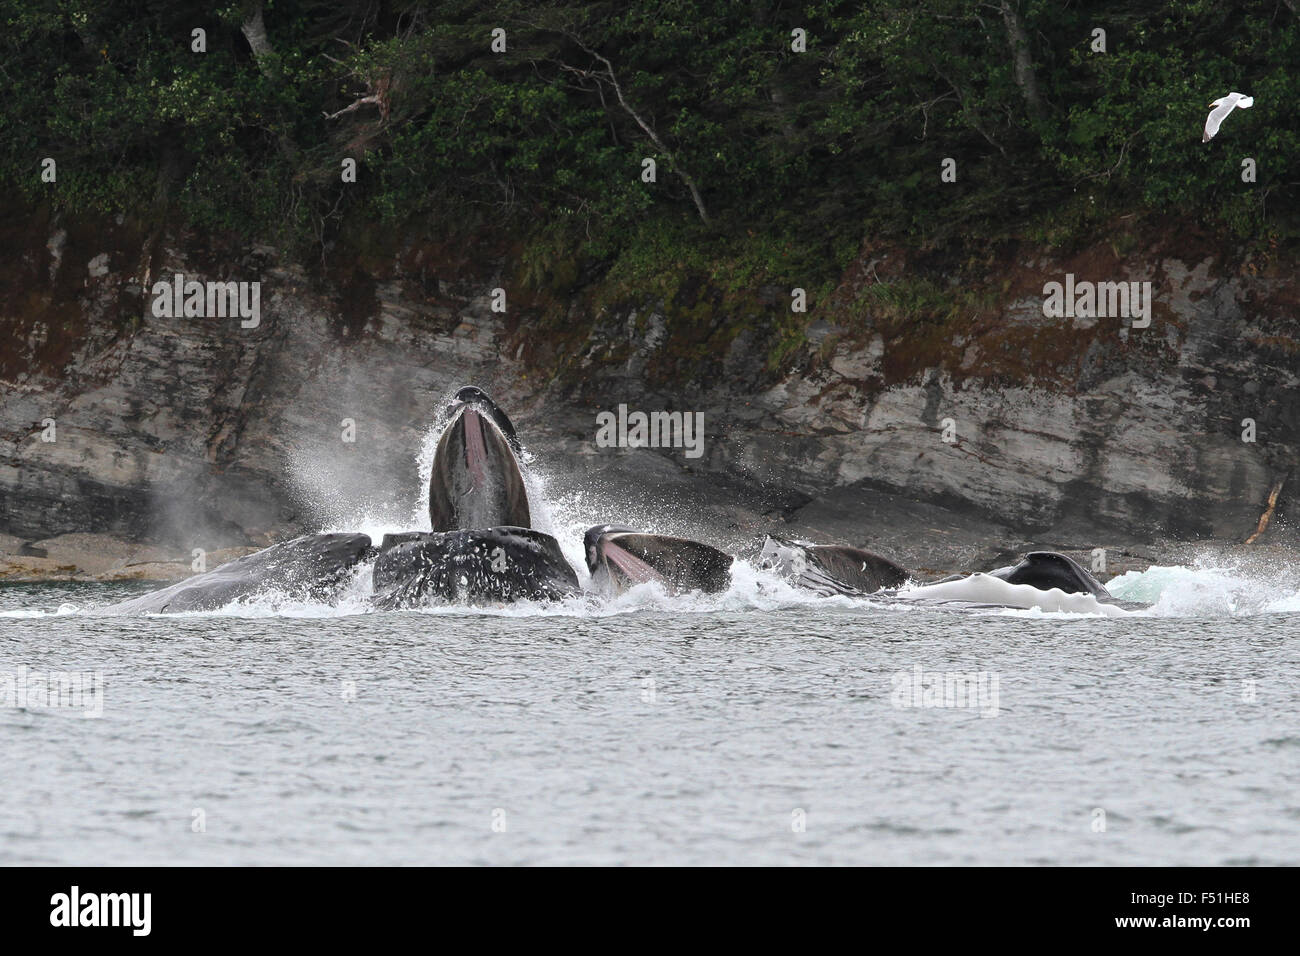 Humpback Whales cooperative bubble-net feeding in Alaskan waters Stock Photo